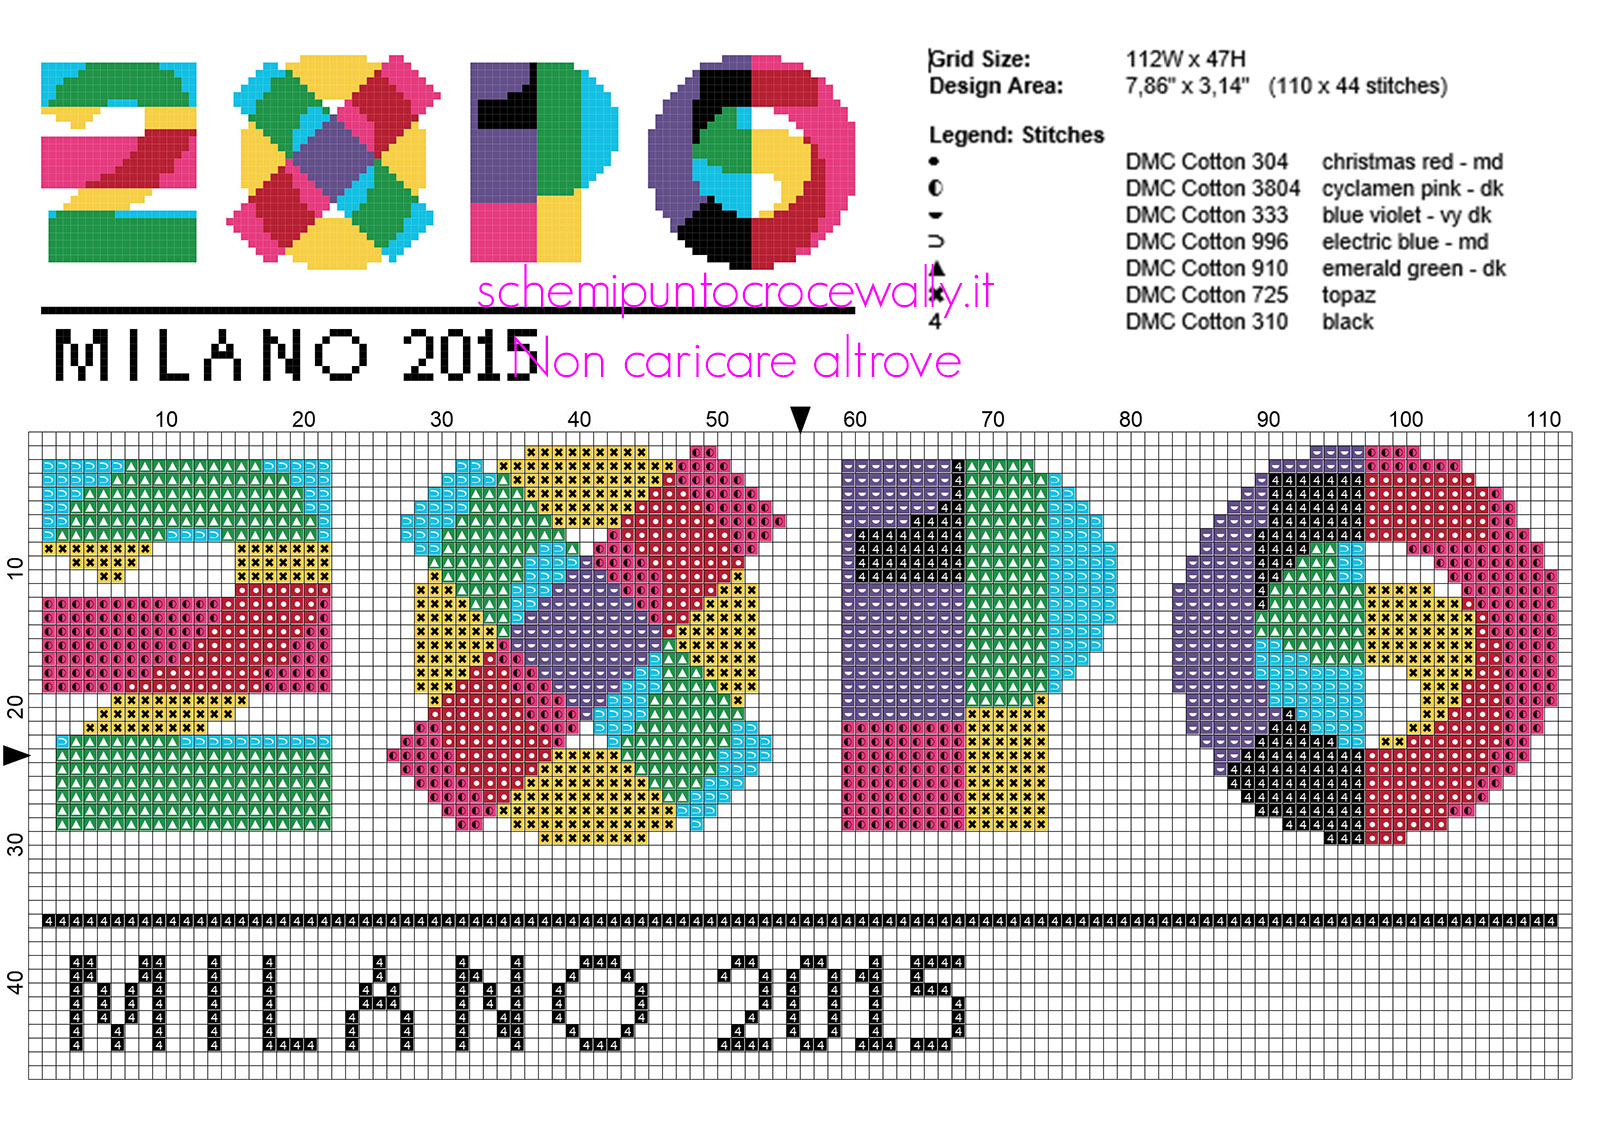 EXPO Milano 2015 schema punto croce gratis